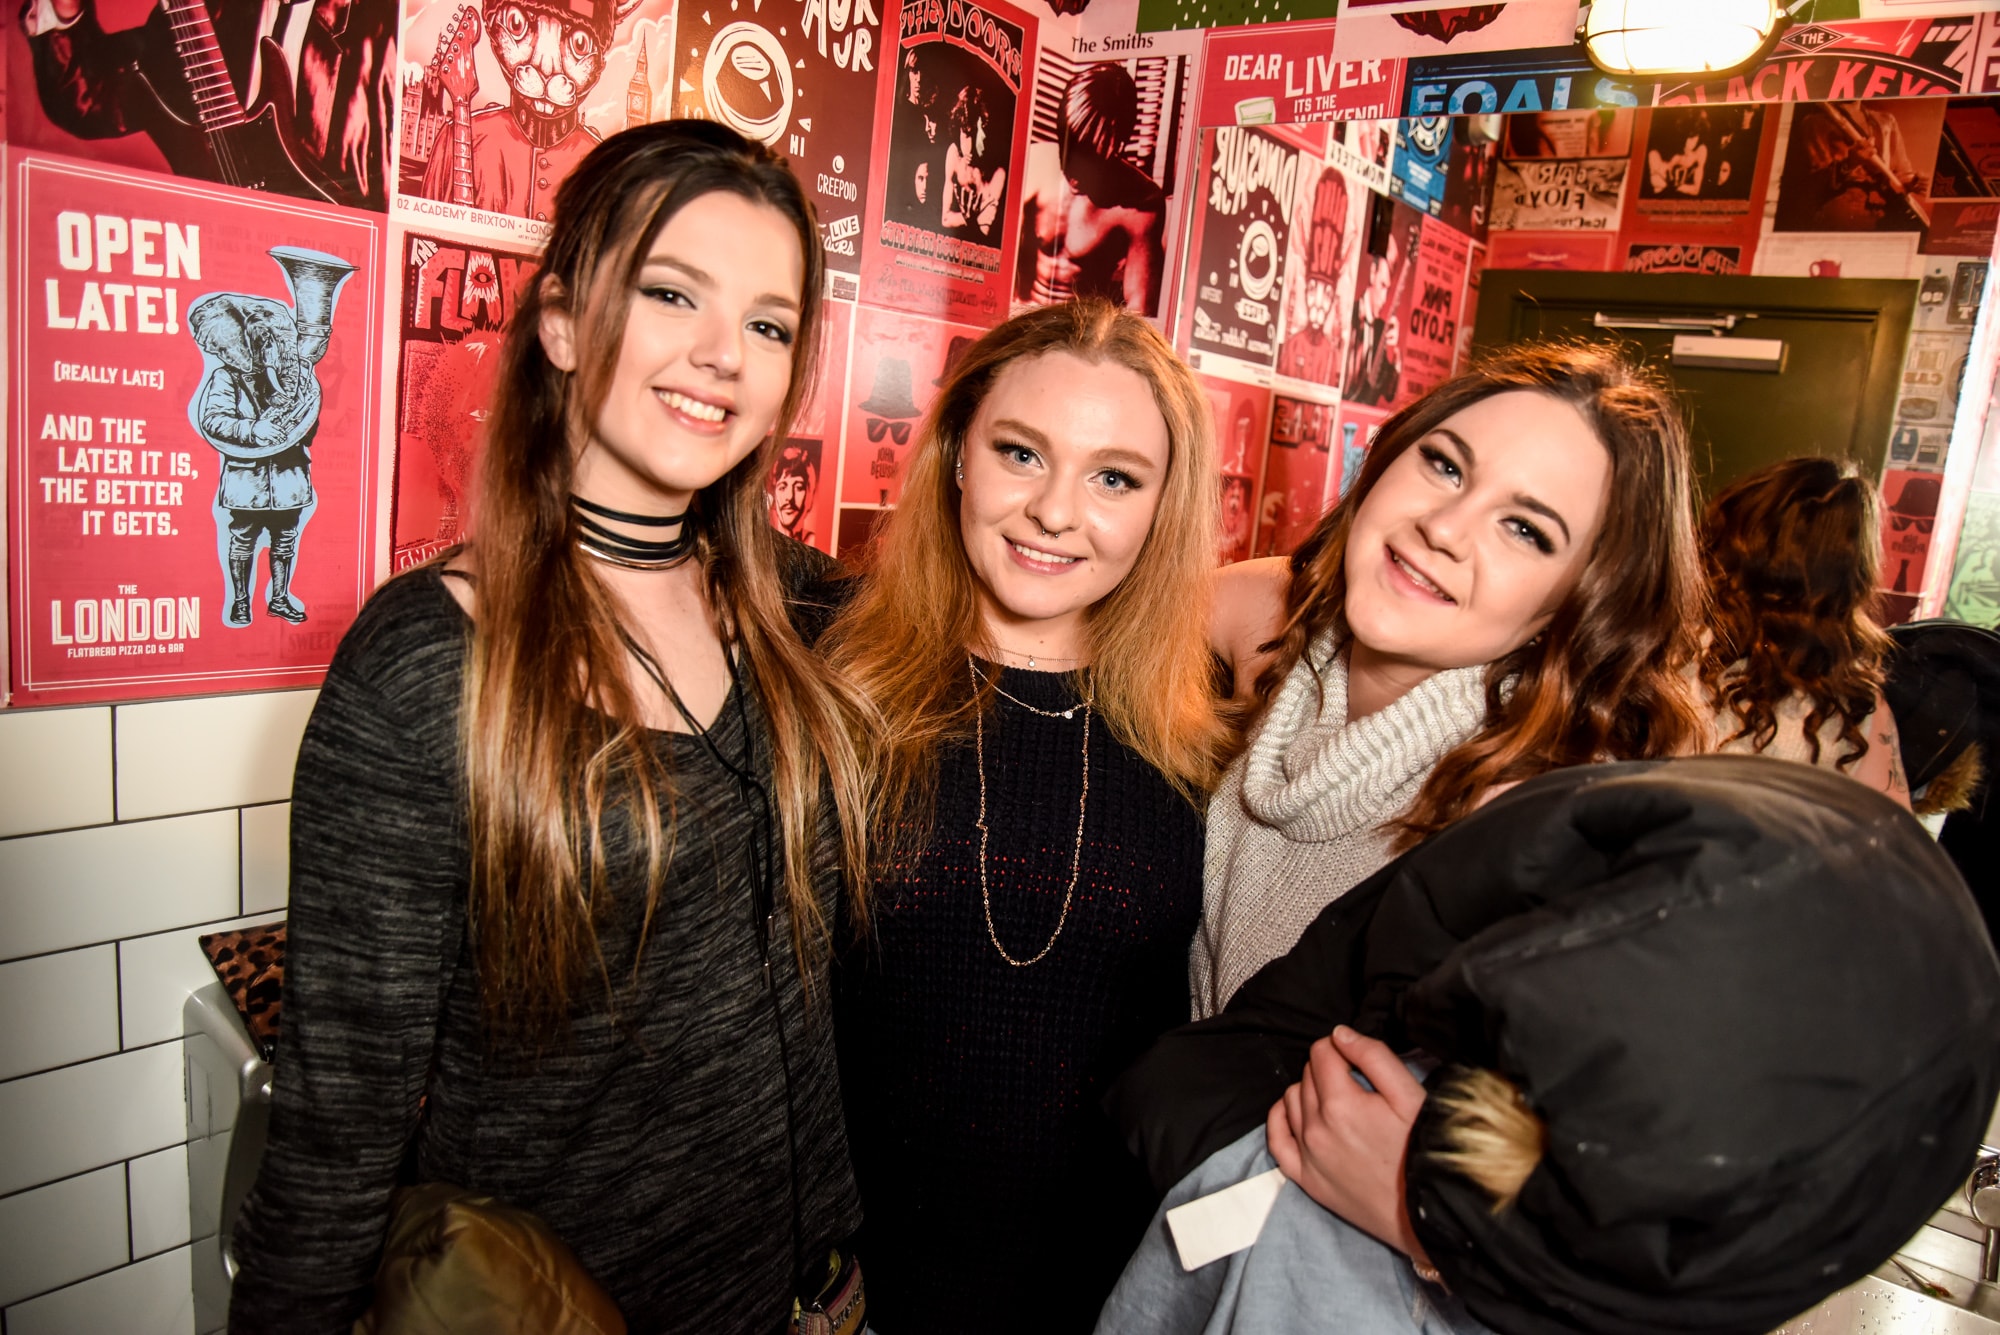 Pretty Girls Partying London Bar Queenstown Big Night Out Pub Crawl 